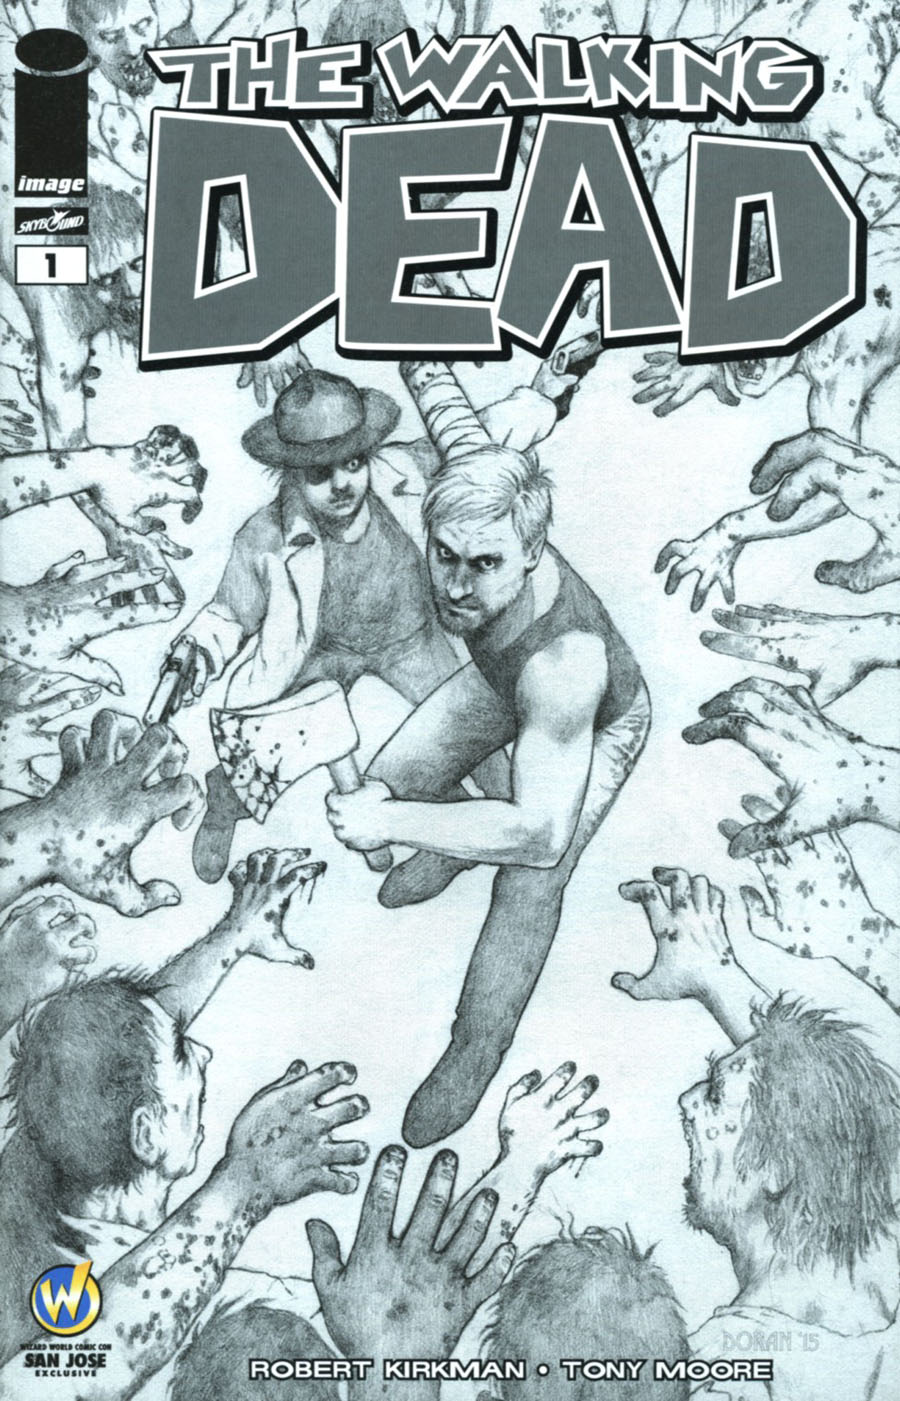 Walking Dead #1 Cover Q Wizard World Comic Con San Jose VIP Exclusive Colleen Doran Sketch Variant Cover